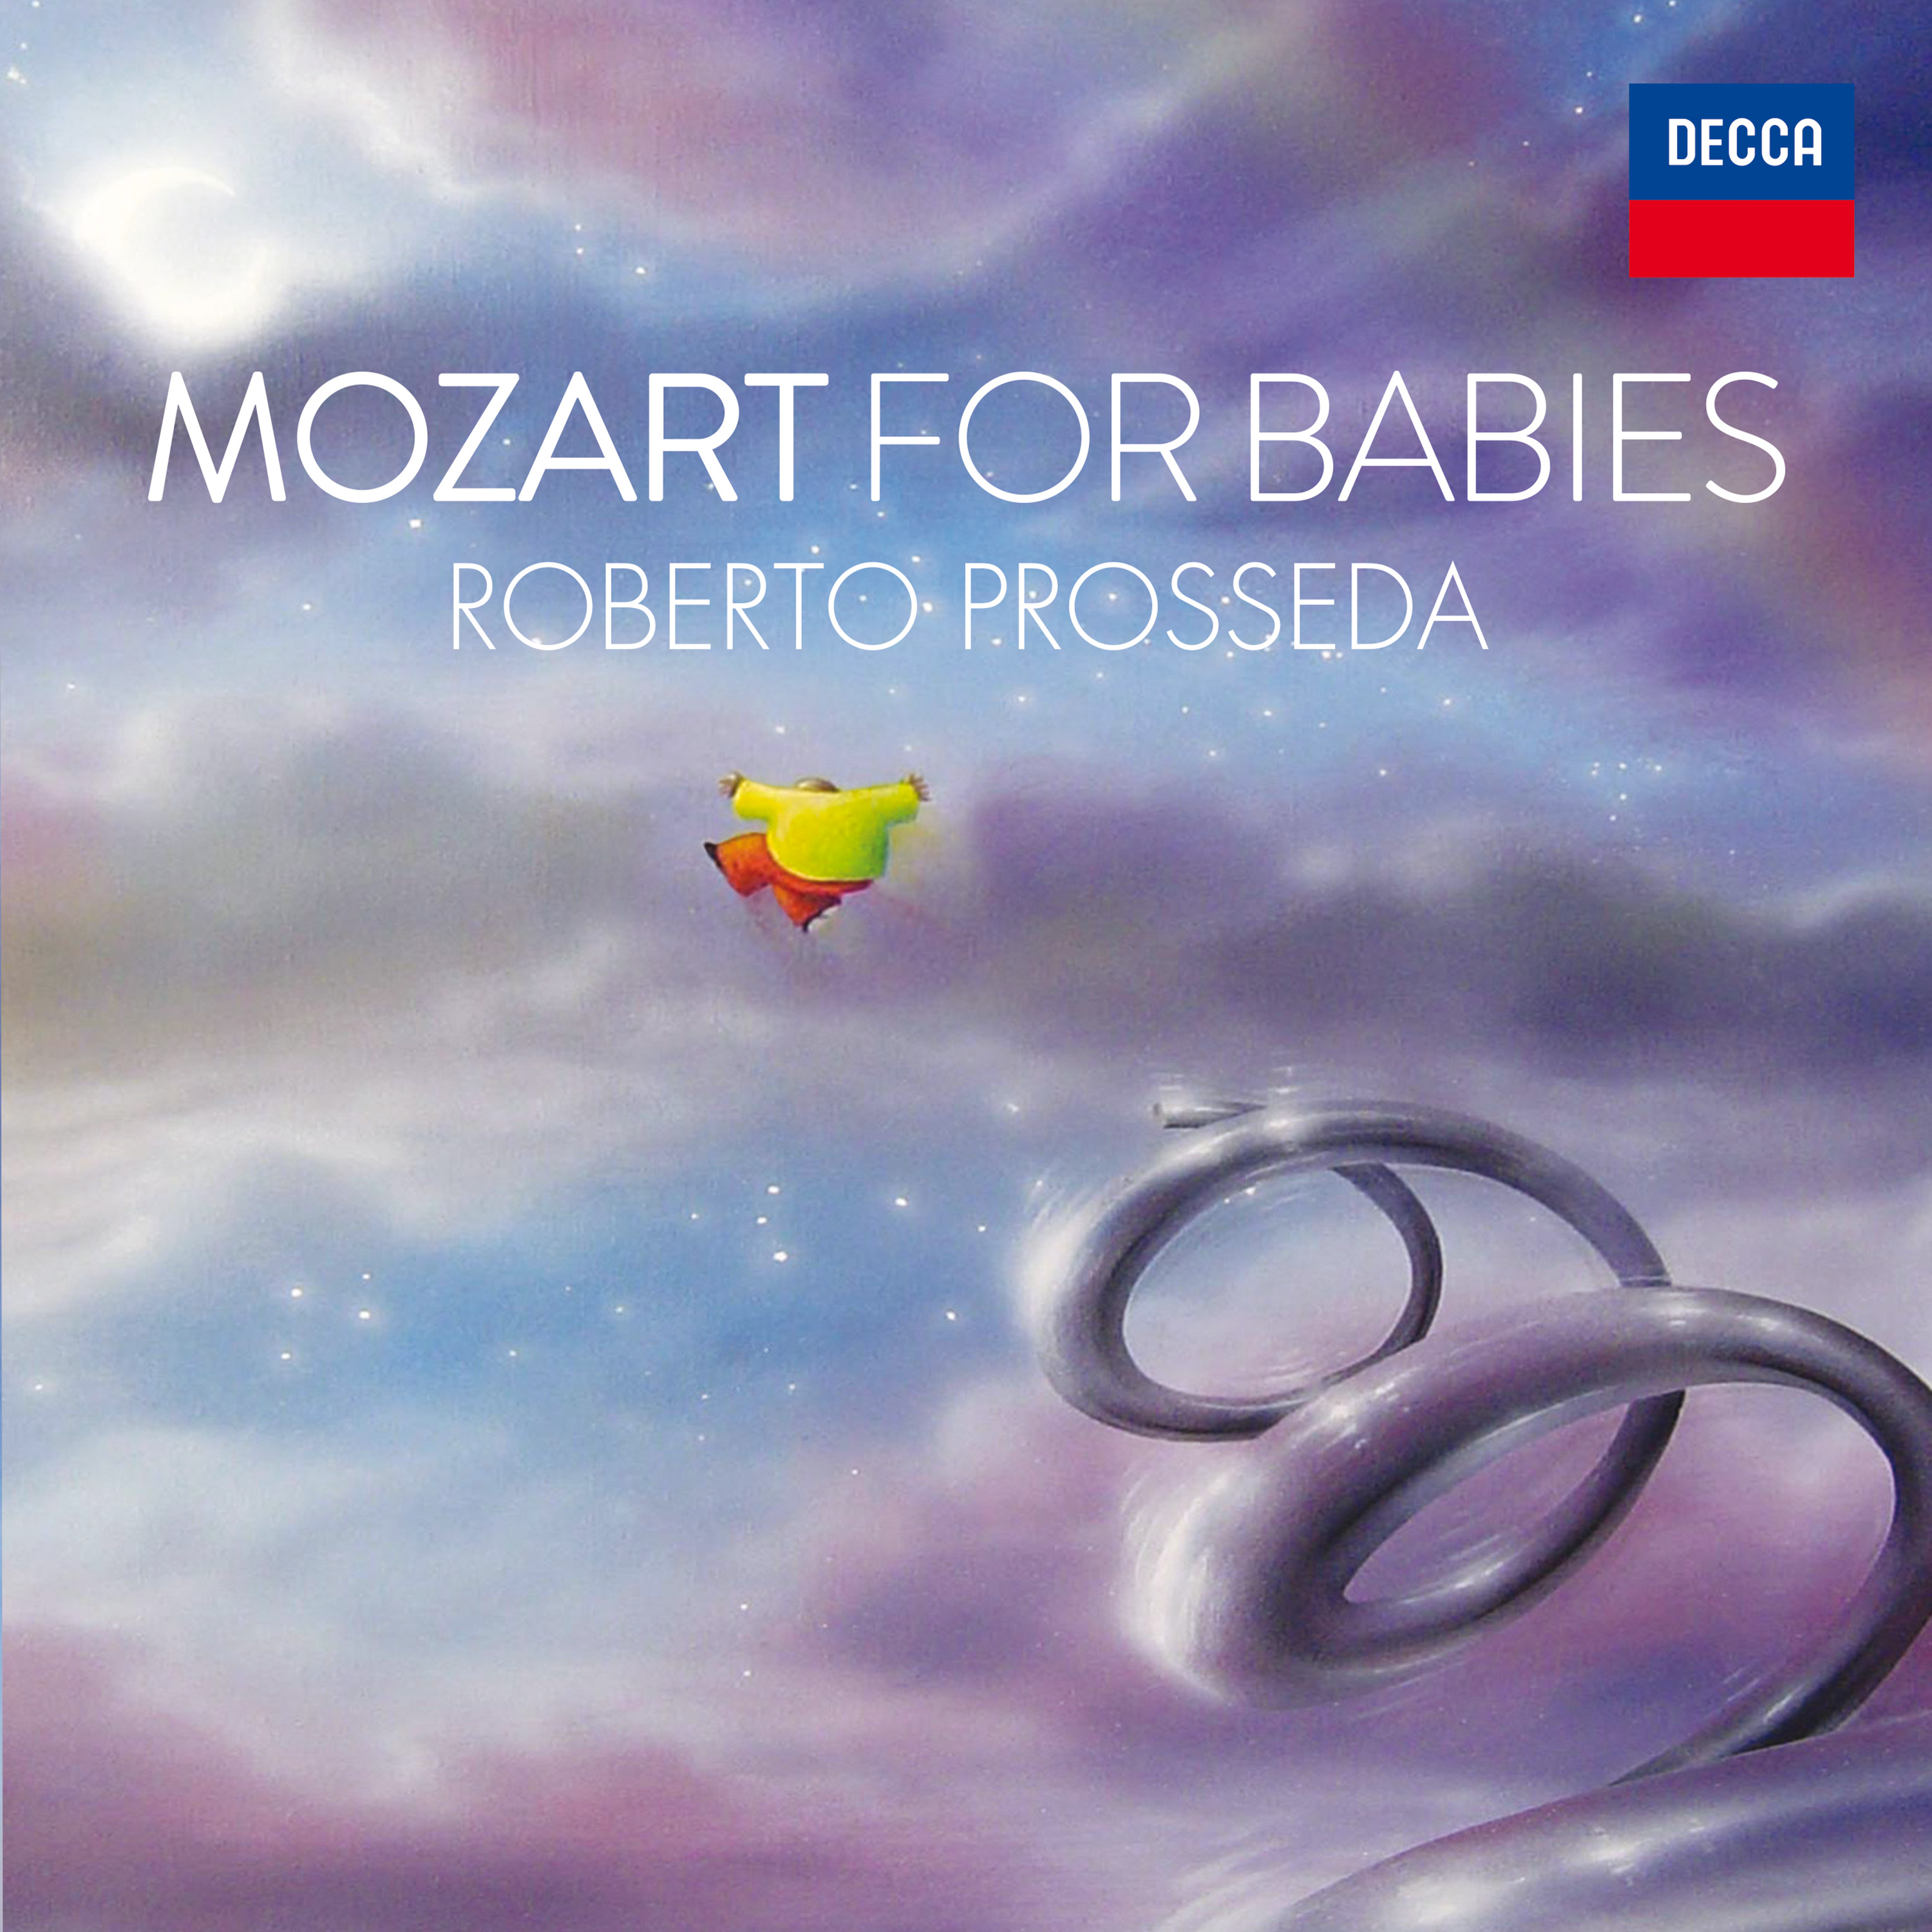 Roberto Prosseda:  'Mozart For Babies'